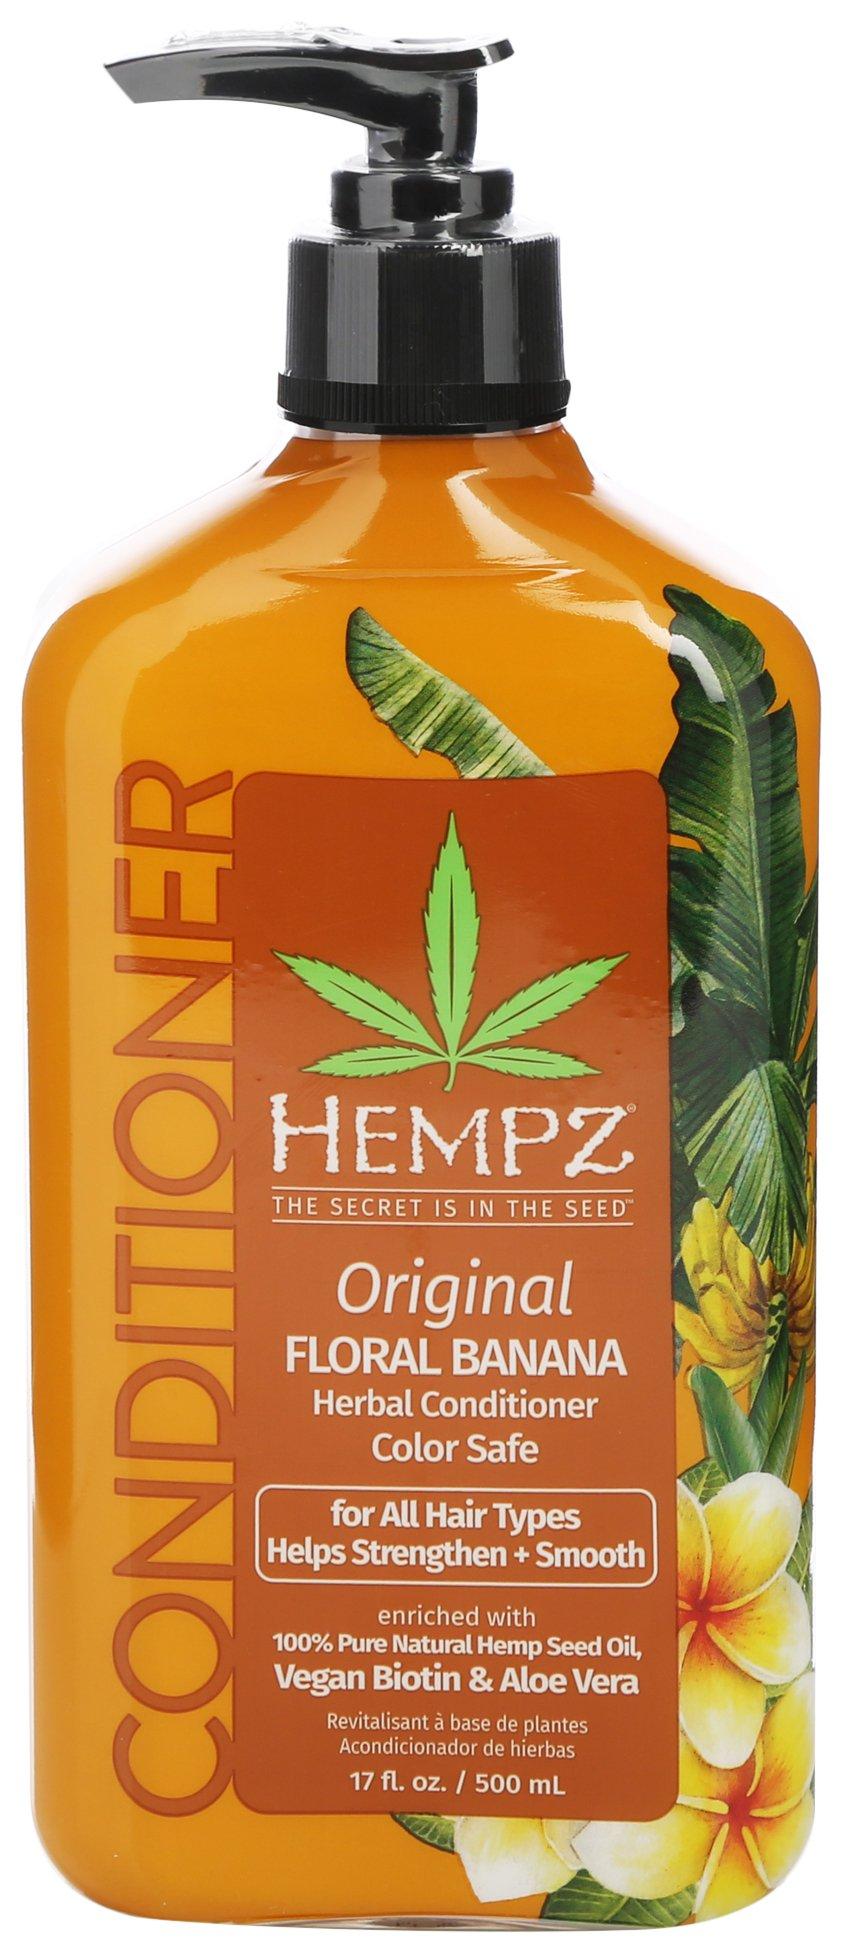 Hempz 17 Fl.Oz. Original Floral Banana Herbal Conditioner